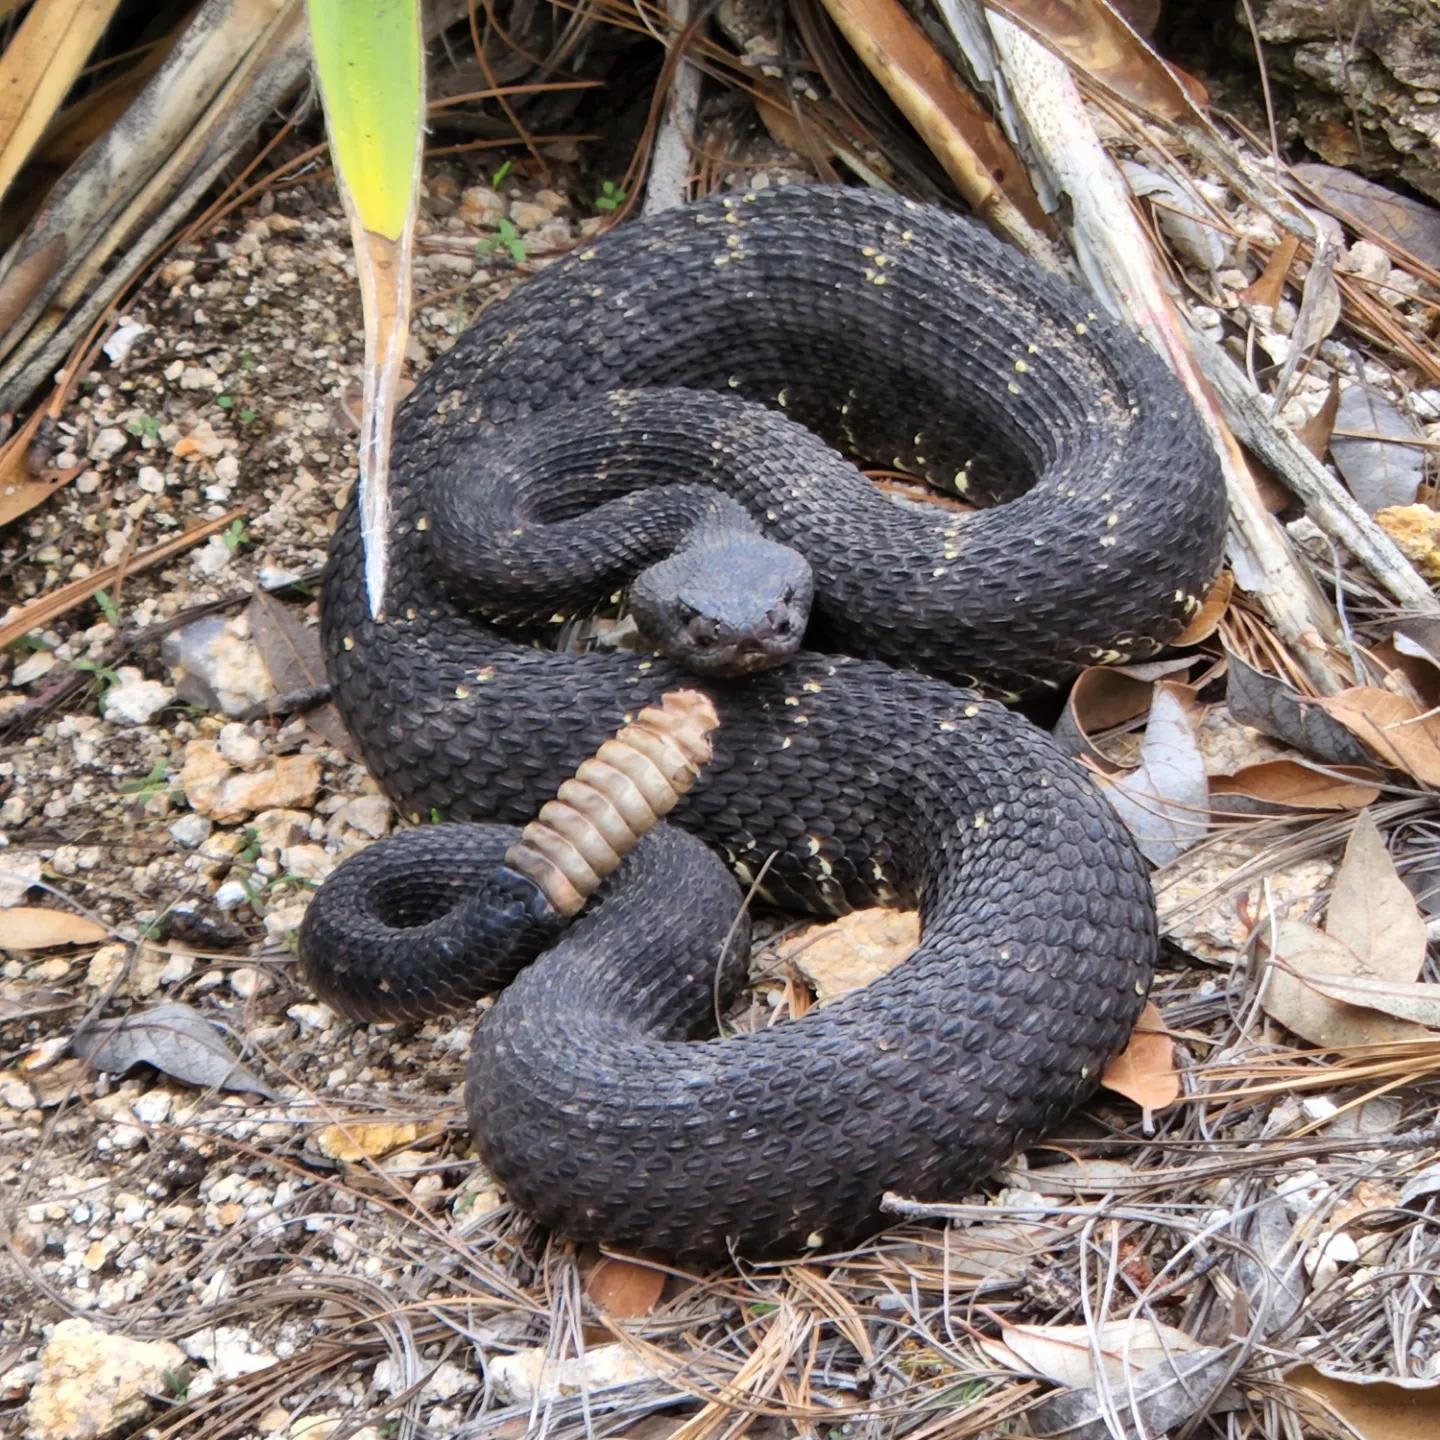 Black Rattlesnake found in Tucson, Az